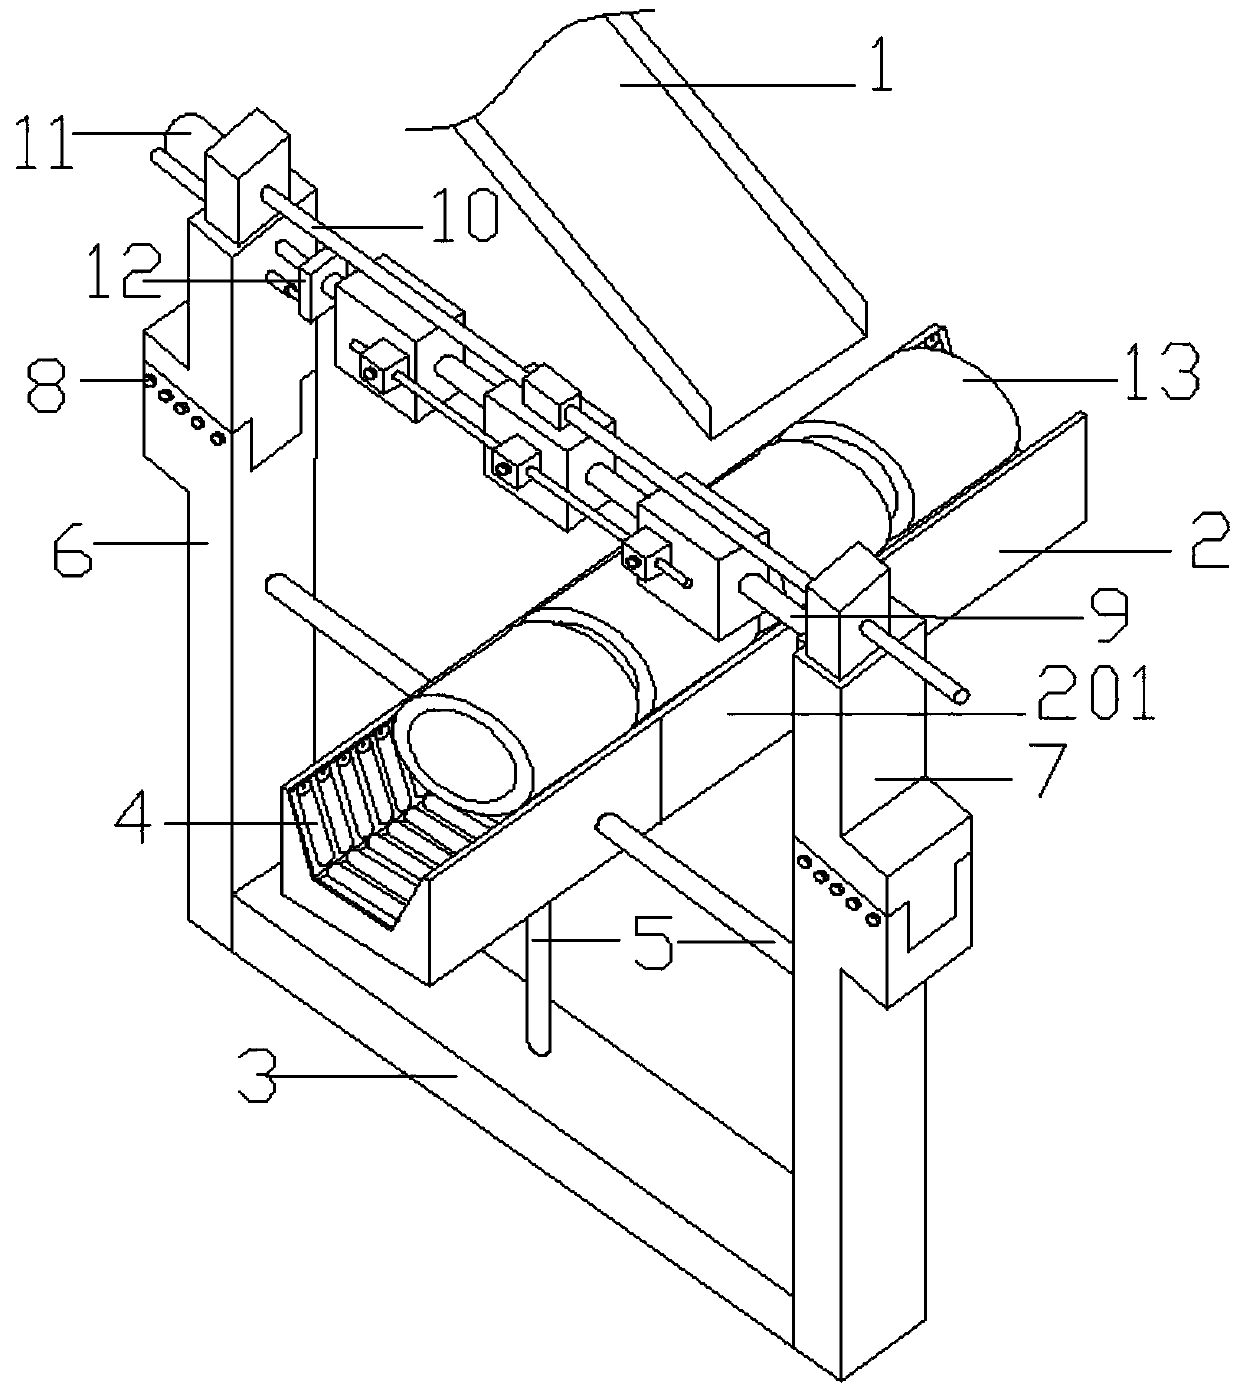 Integrated tubular part word pressing and polishing machine and method